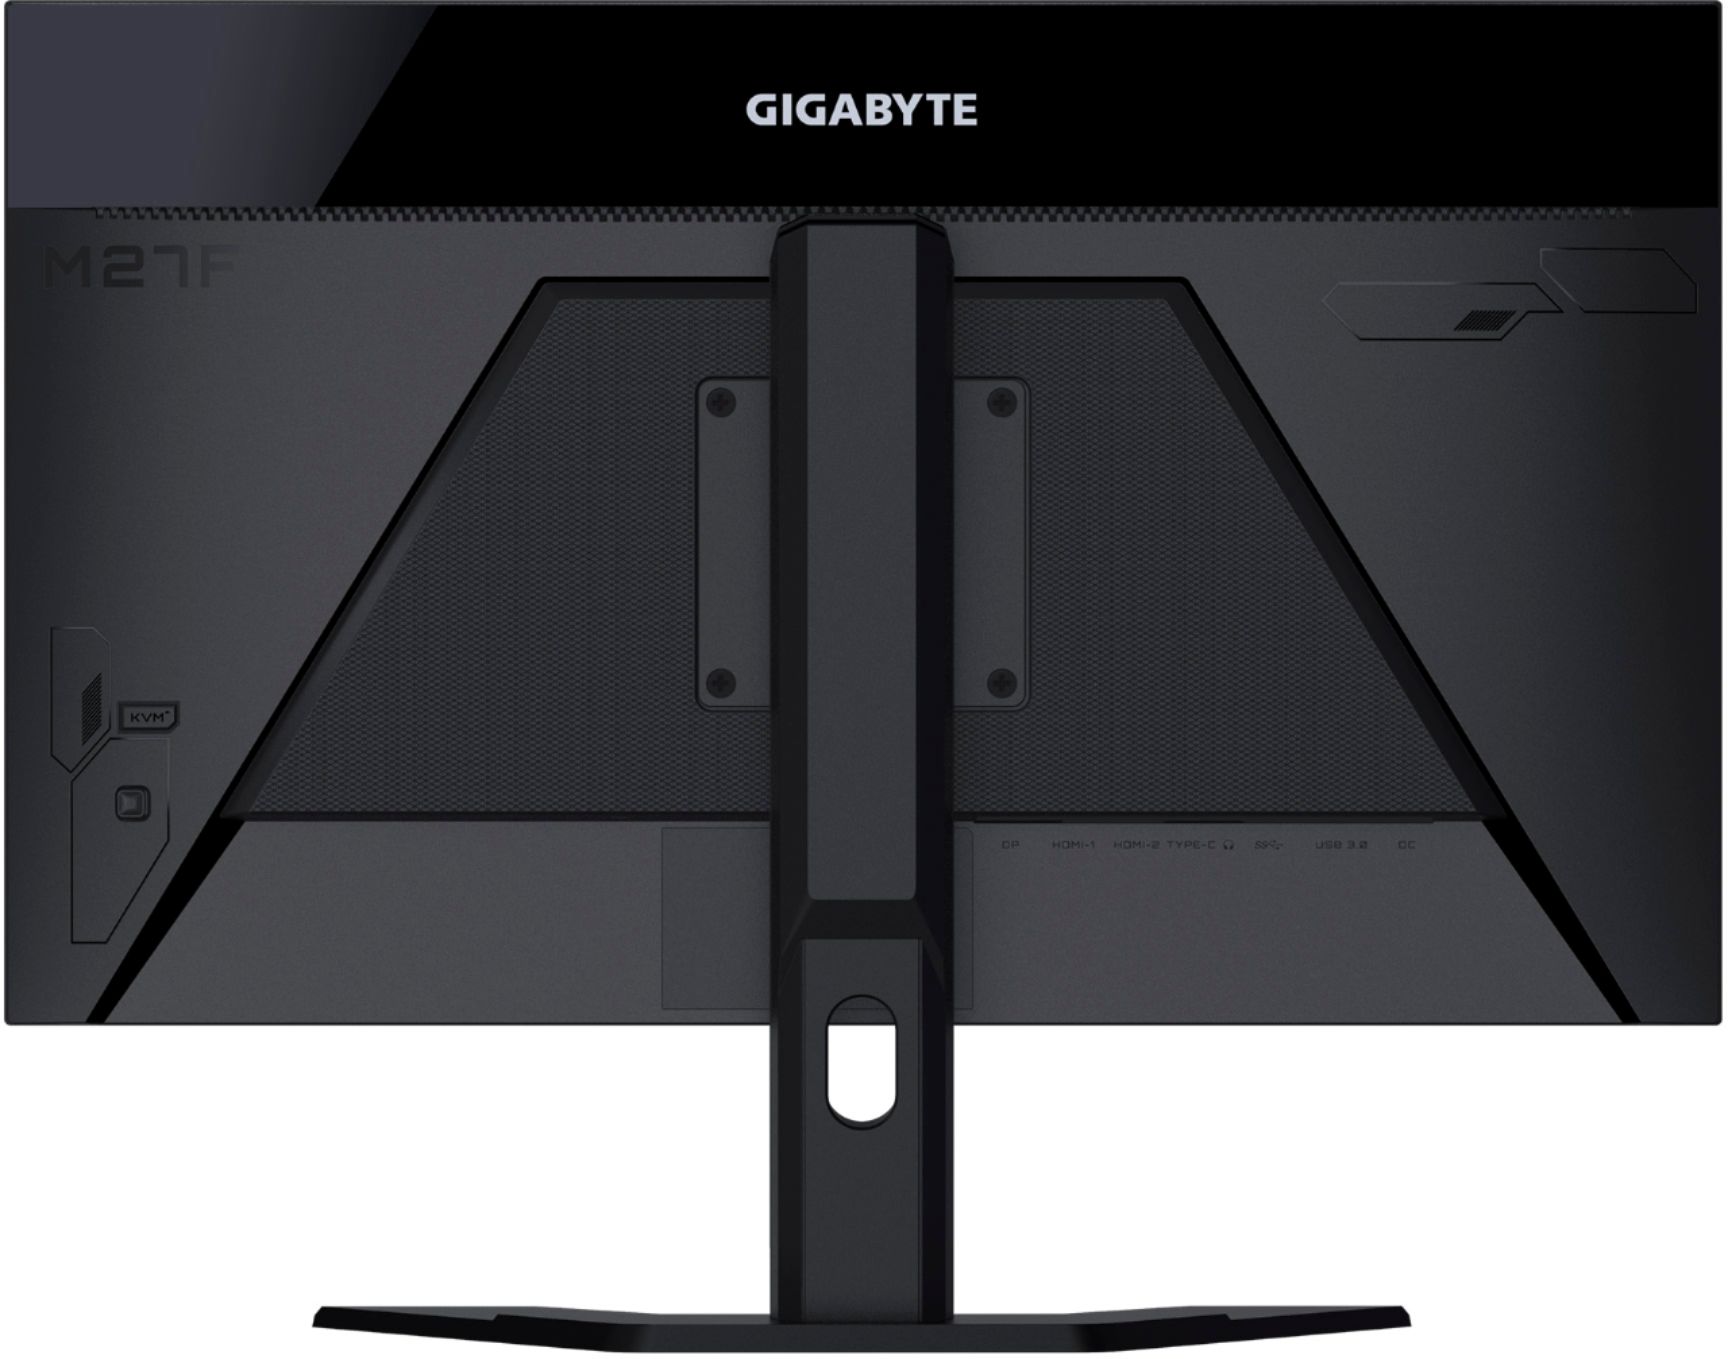 Back View: GIGABYTE - 27" IPS LED FHD FreeSync Monitor with KVM  (HDMI, DisplayPort, USB) - Black